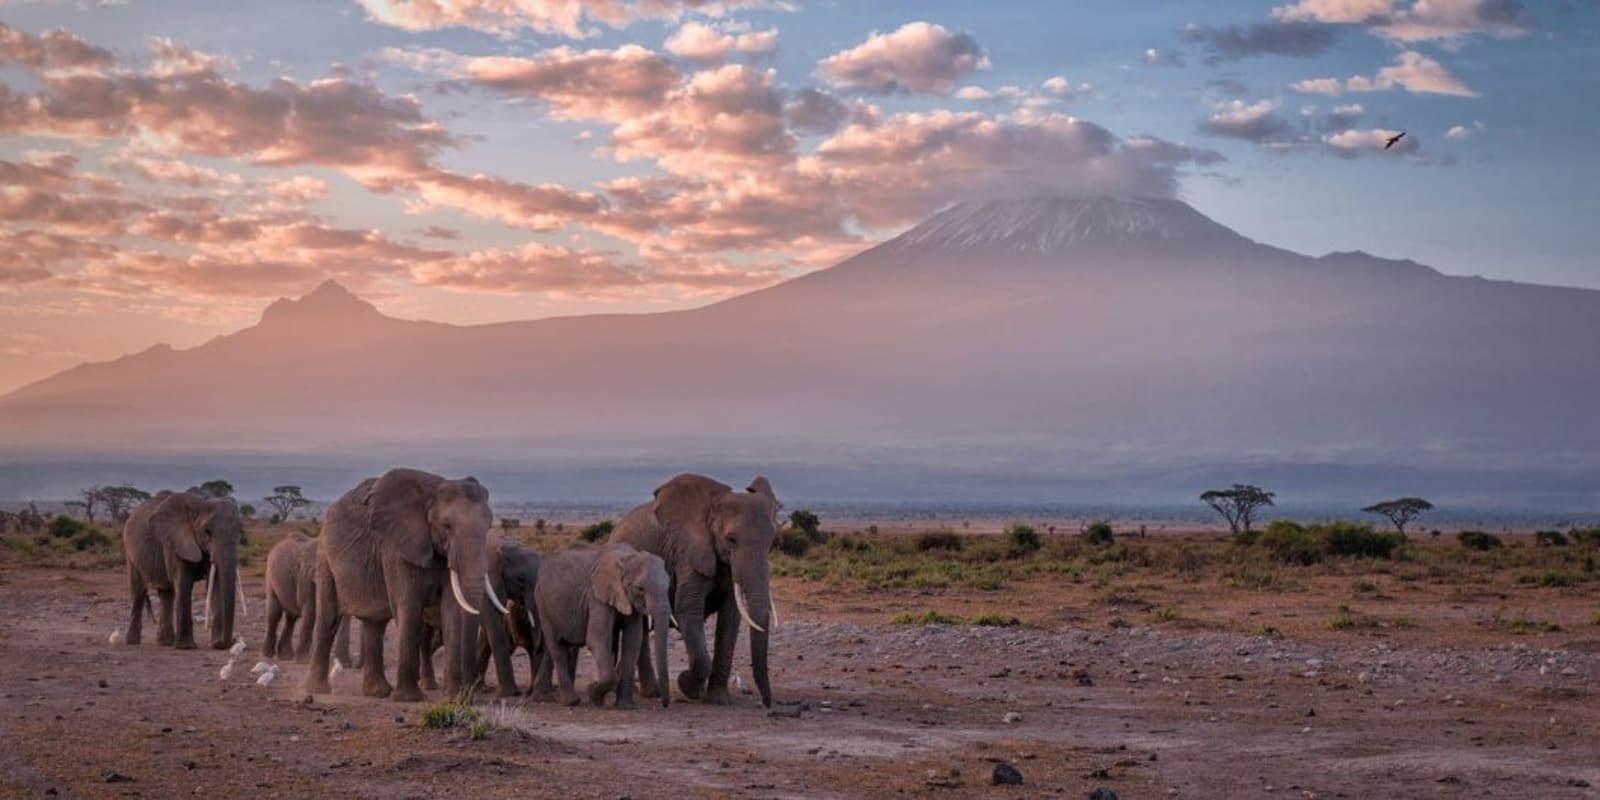 Elephants walking across the plains in Africa